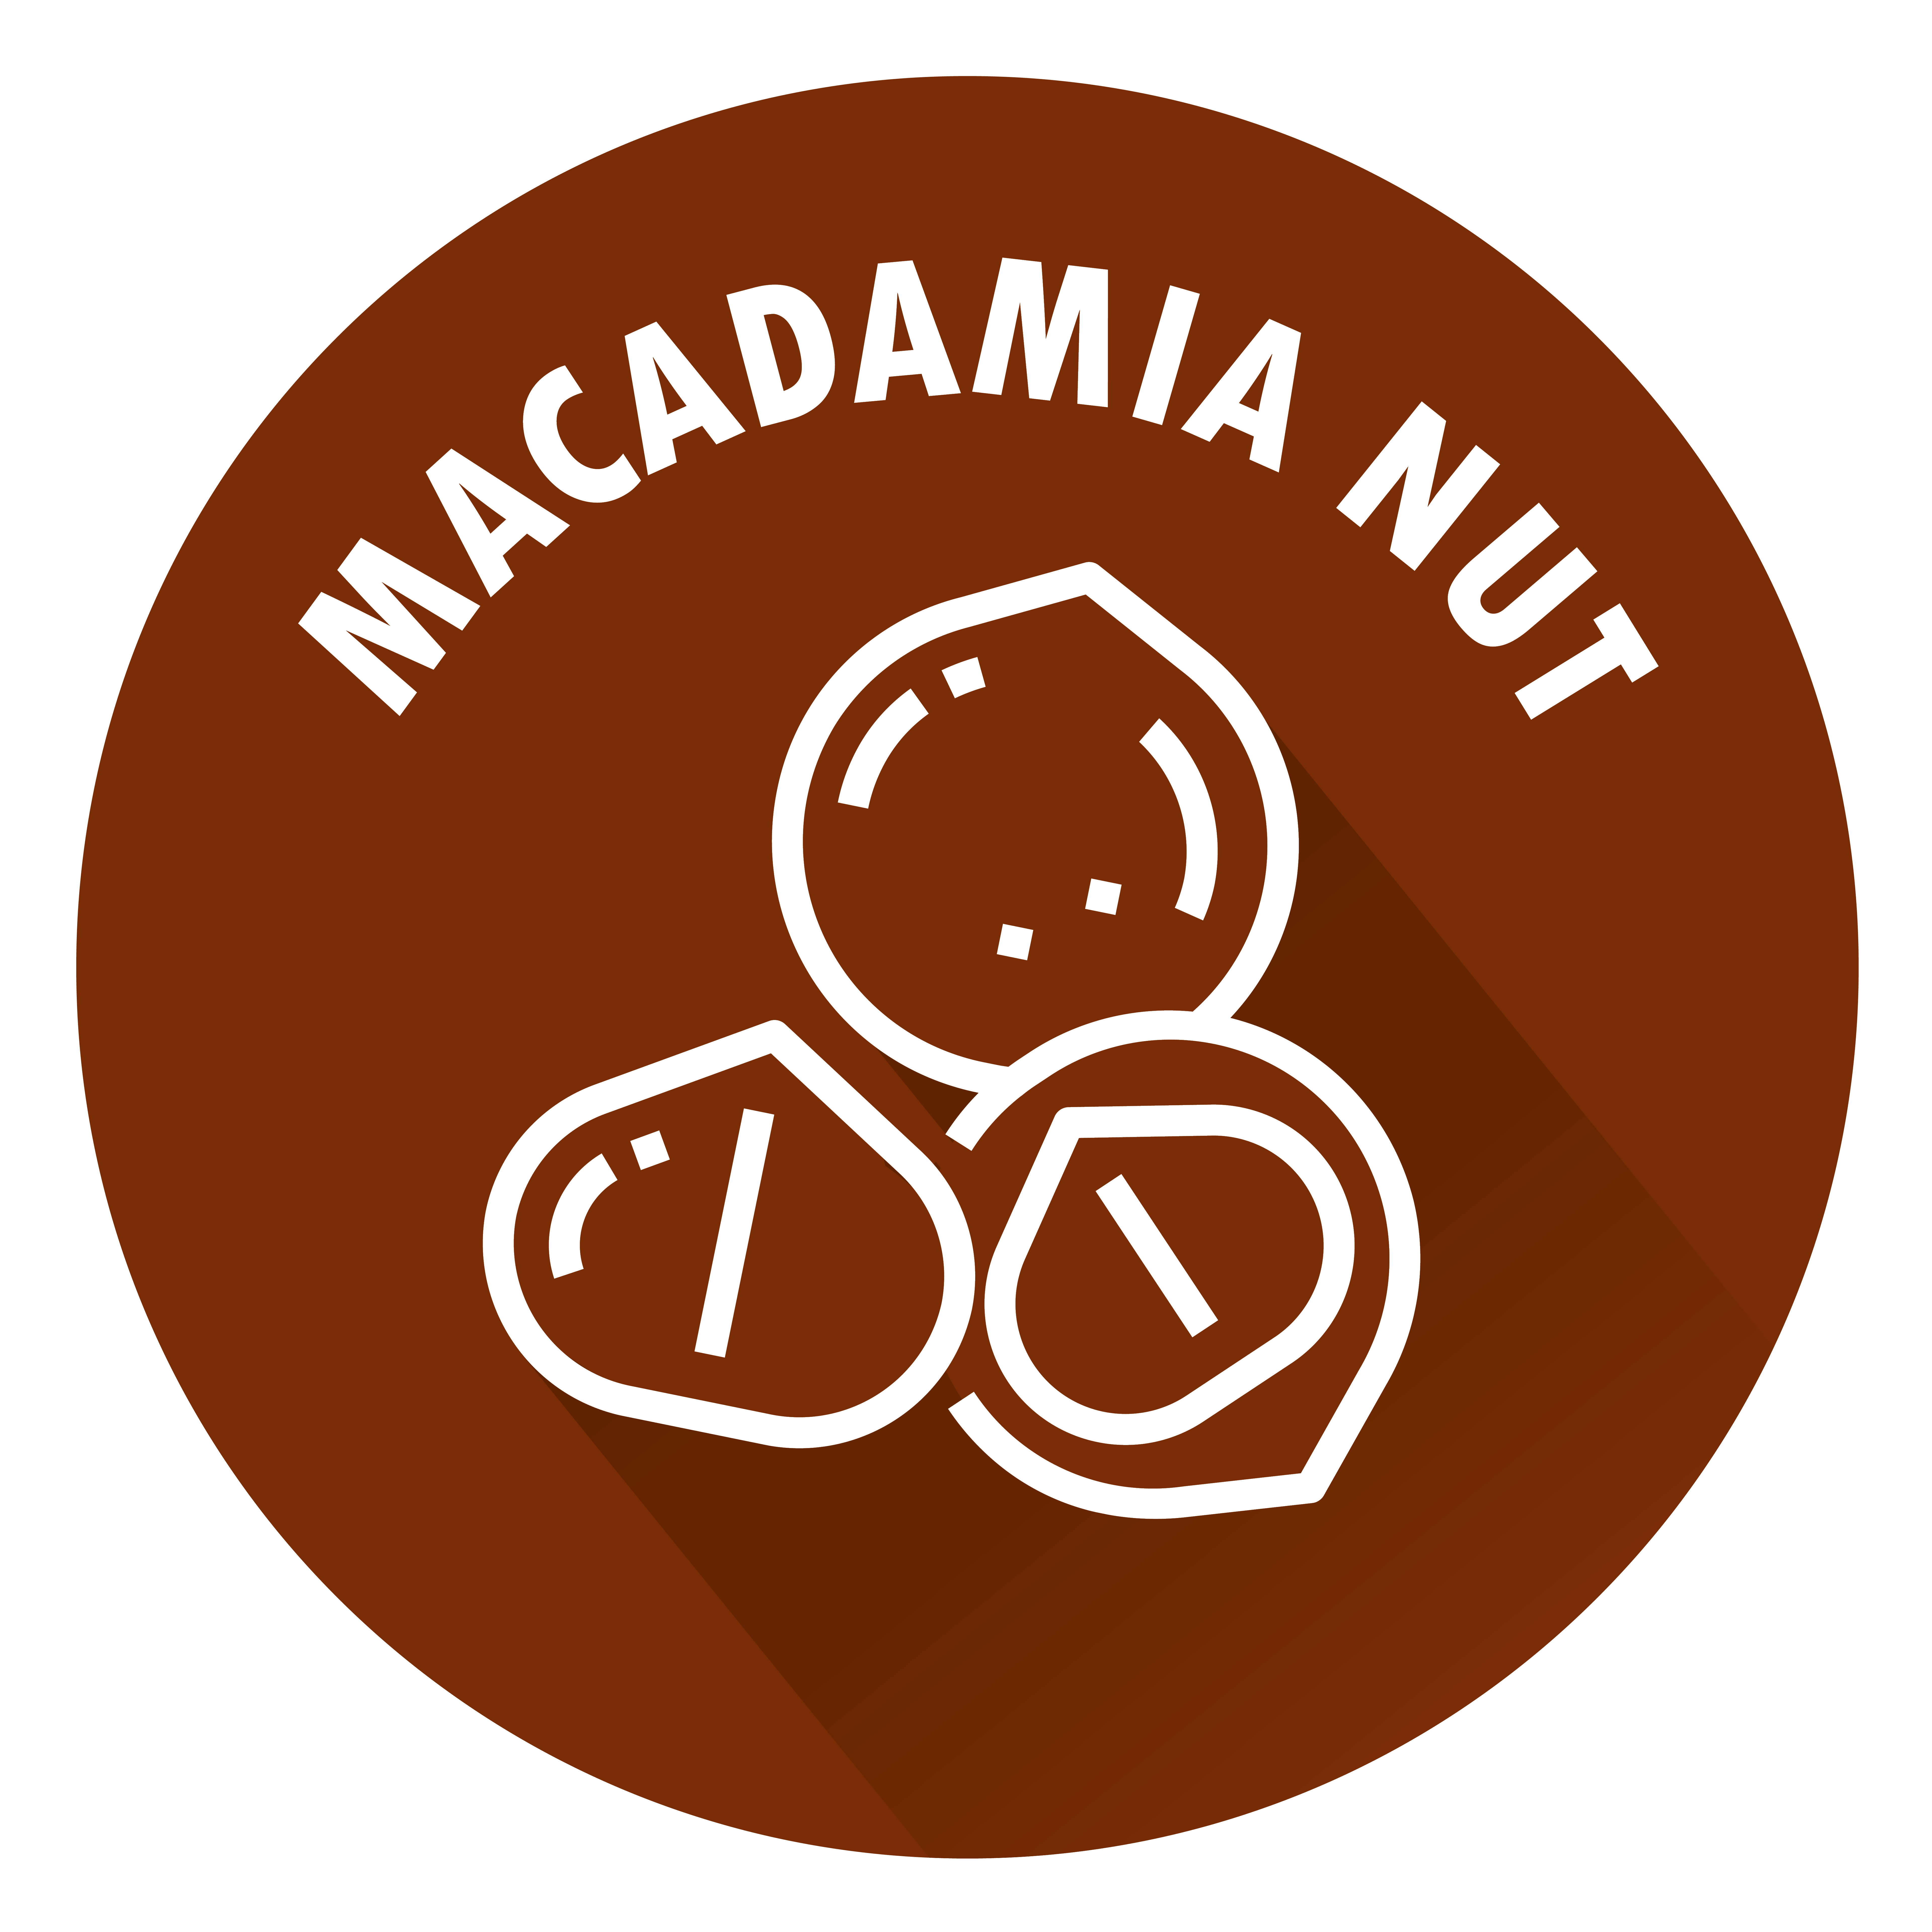 SENSISpec Spike Solution Macadamia nut